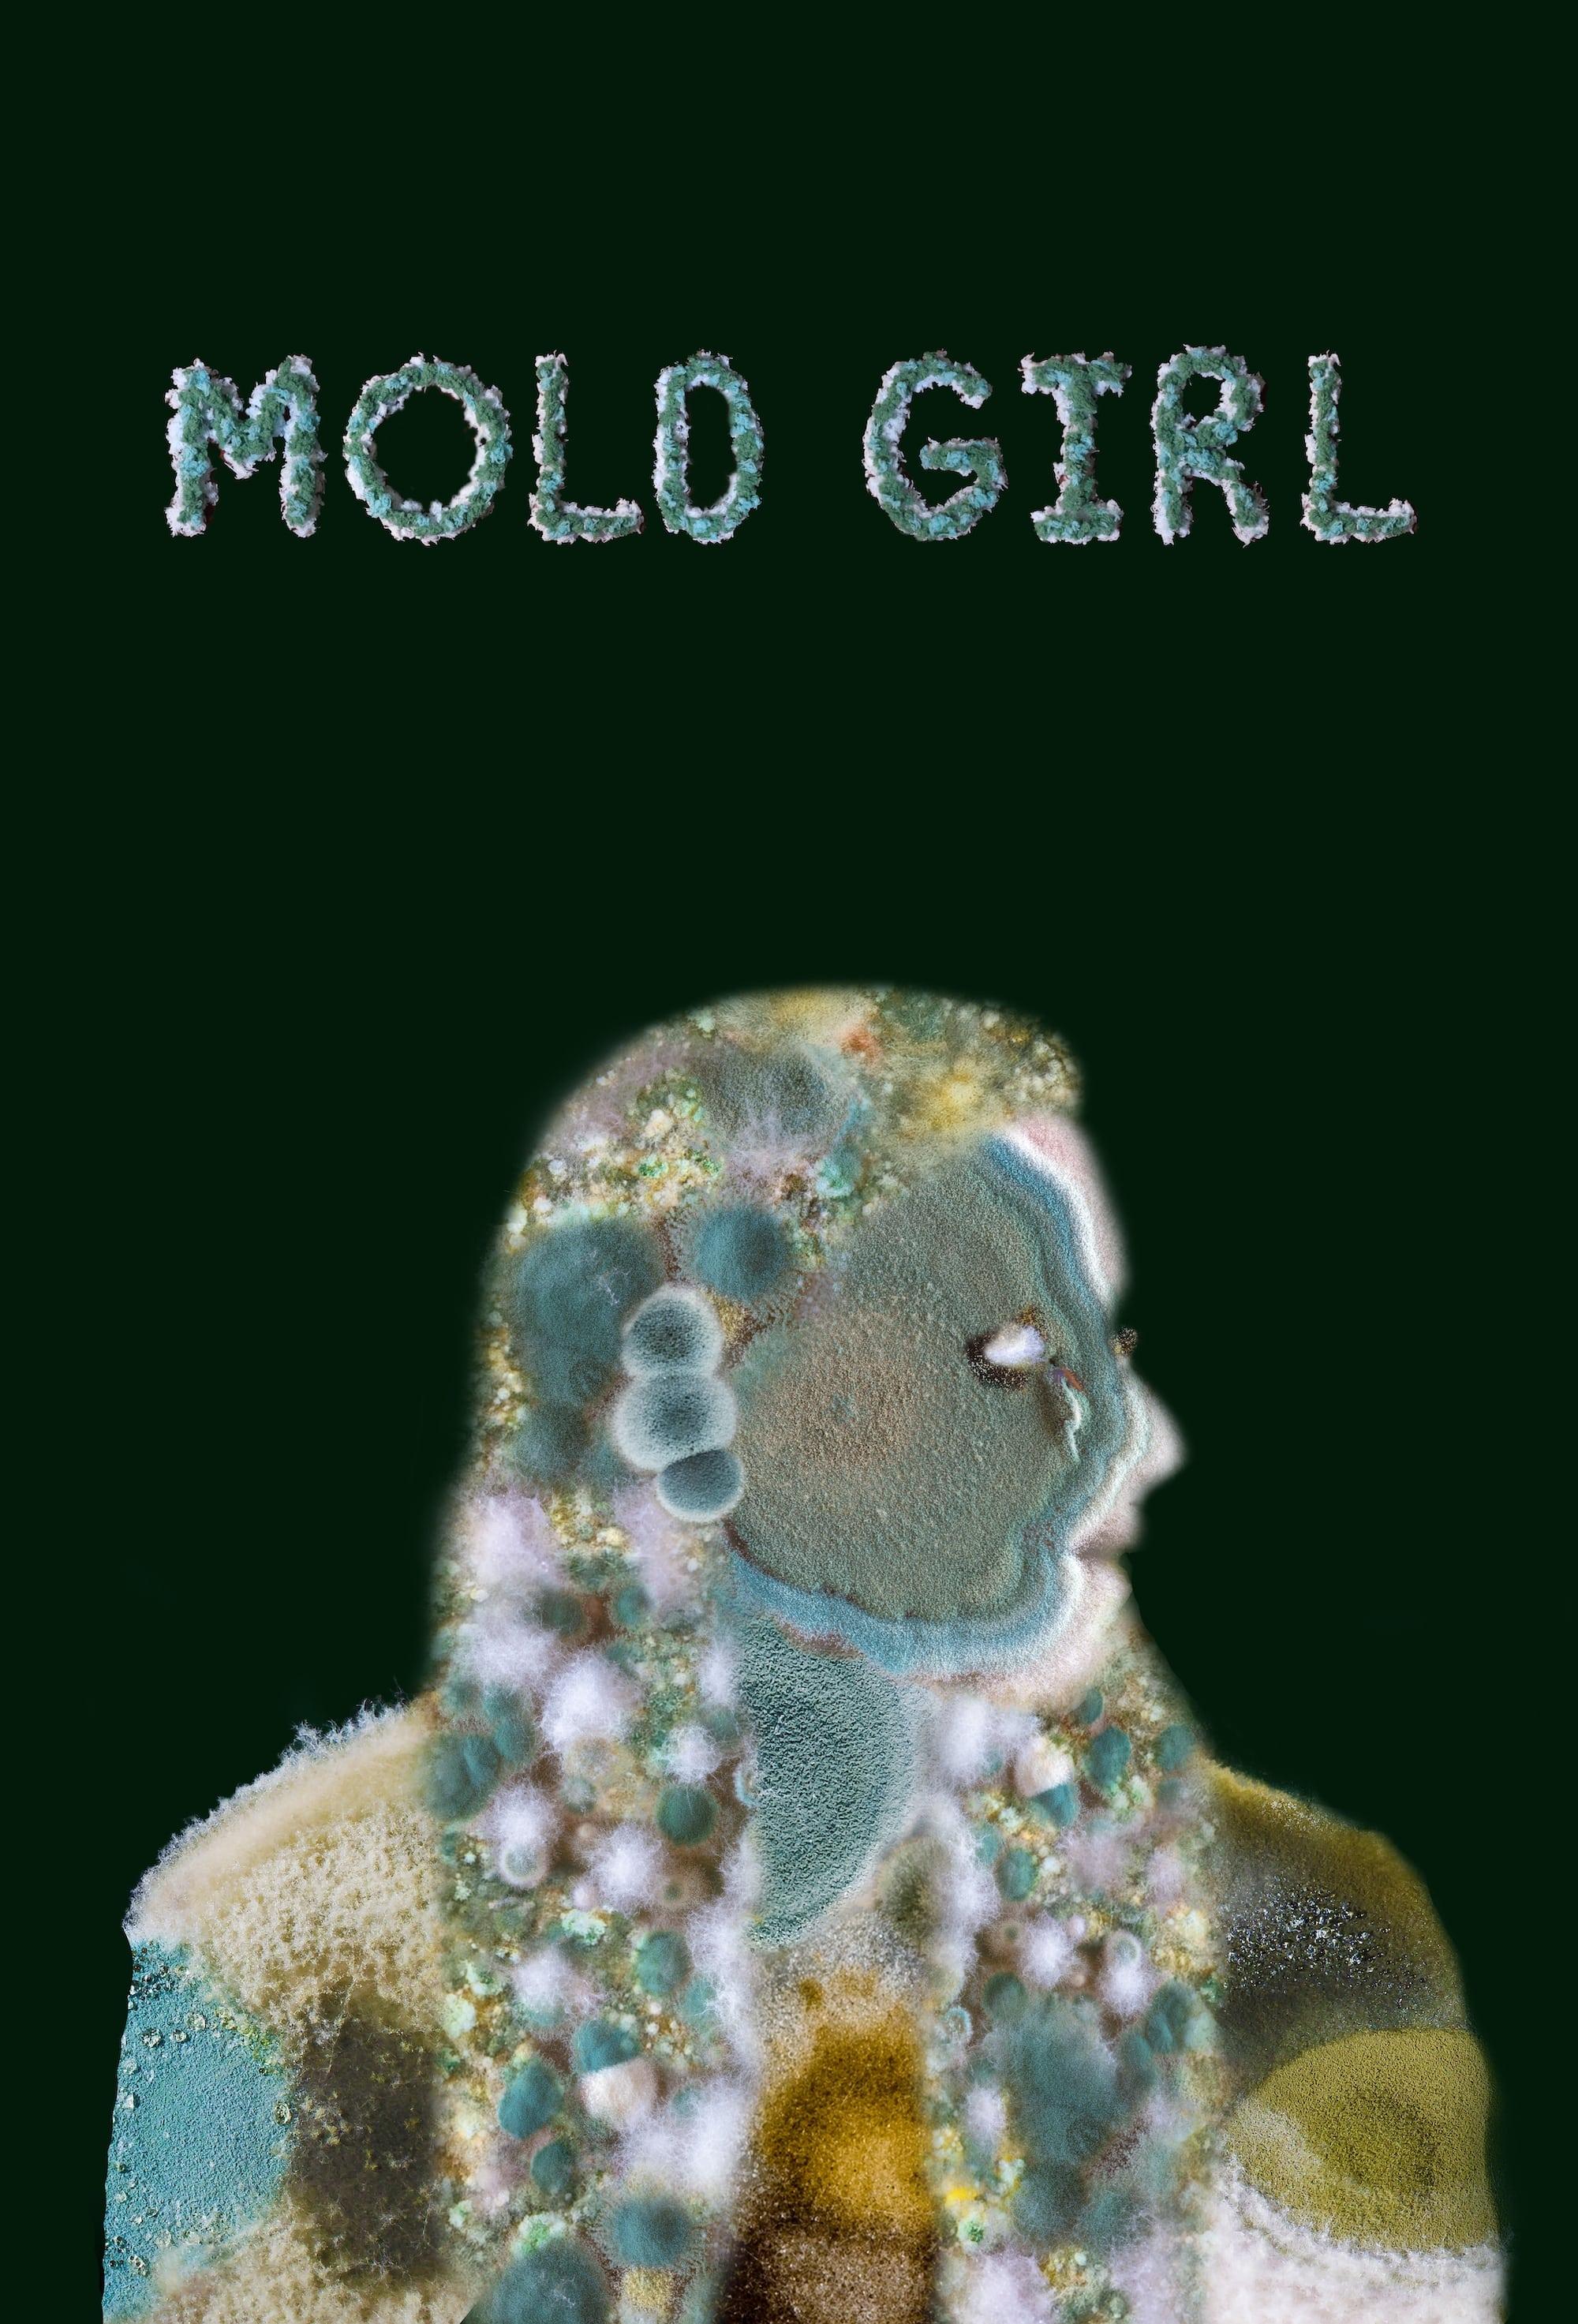 Mold Girl poster